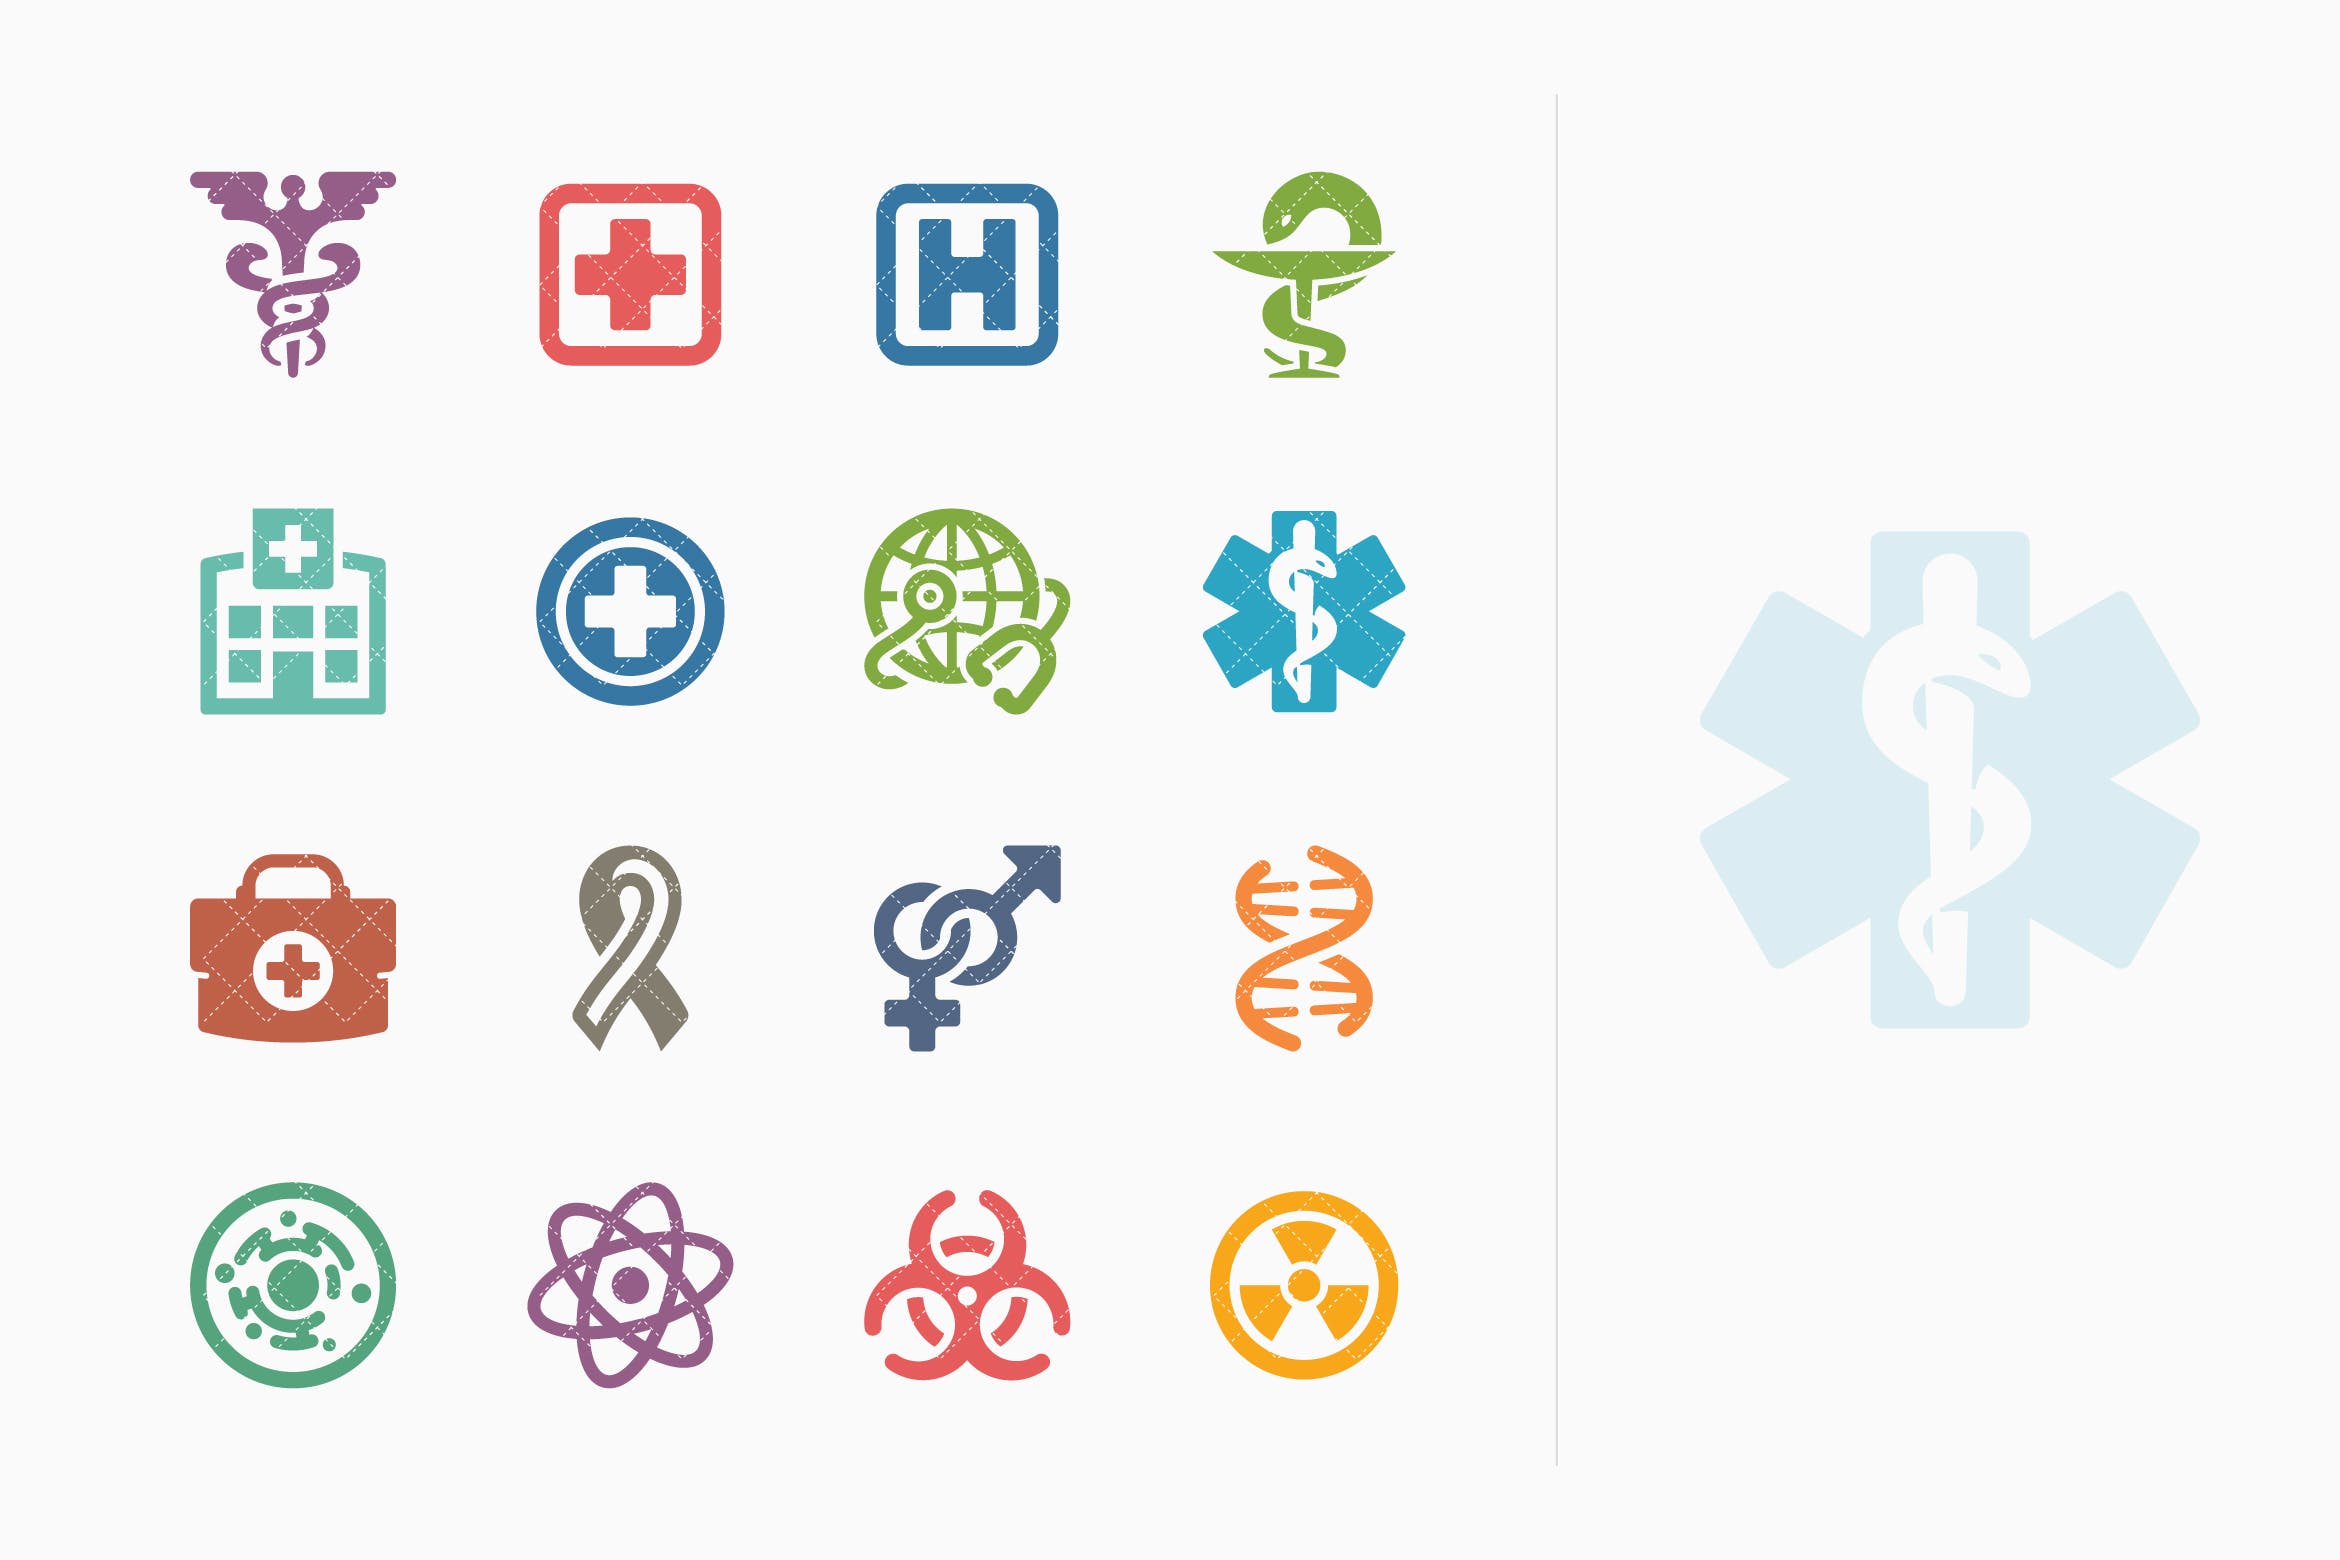 Colored系列-医疗保健主题矢量亿图网易图库精选图标集v1 Medical & Health Care Icons Set 1 – Colored Series插图